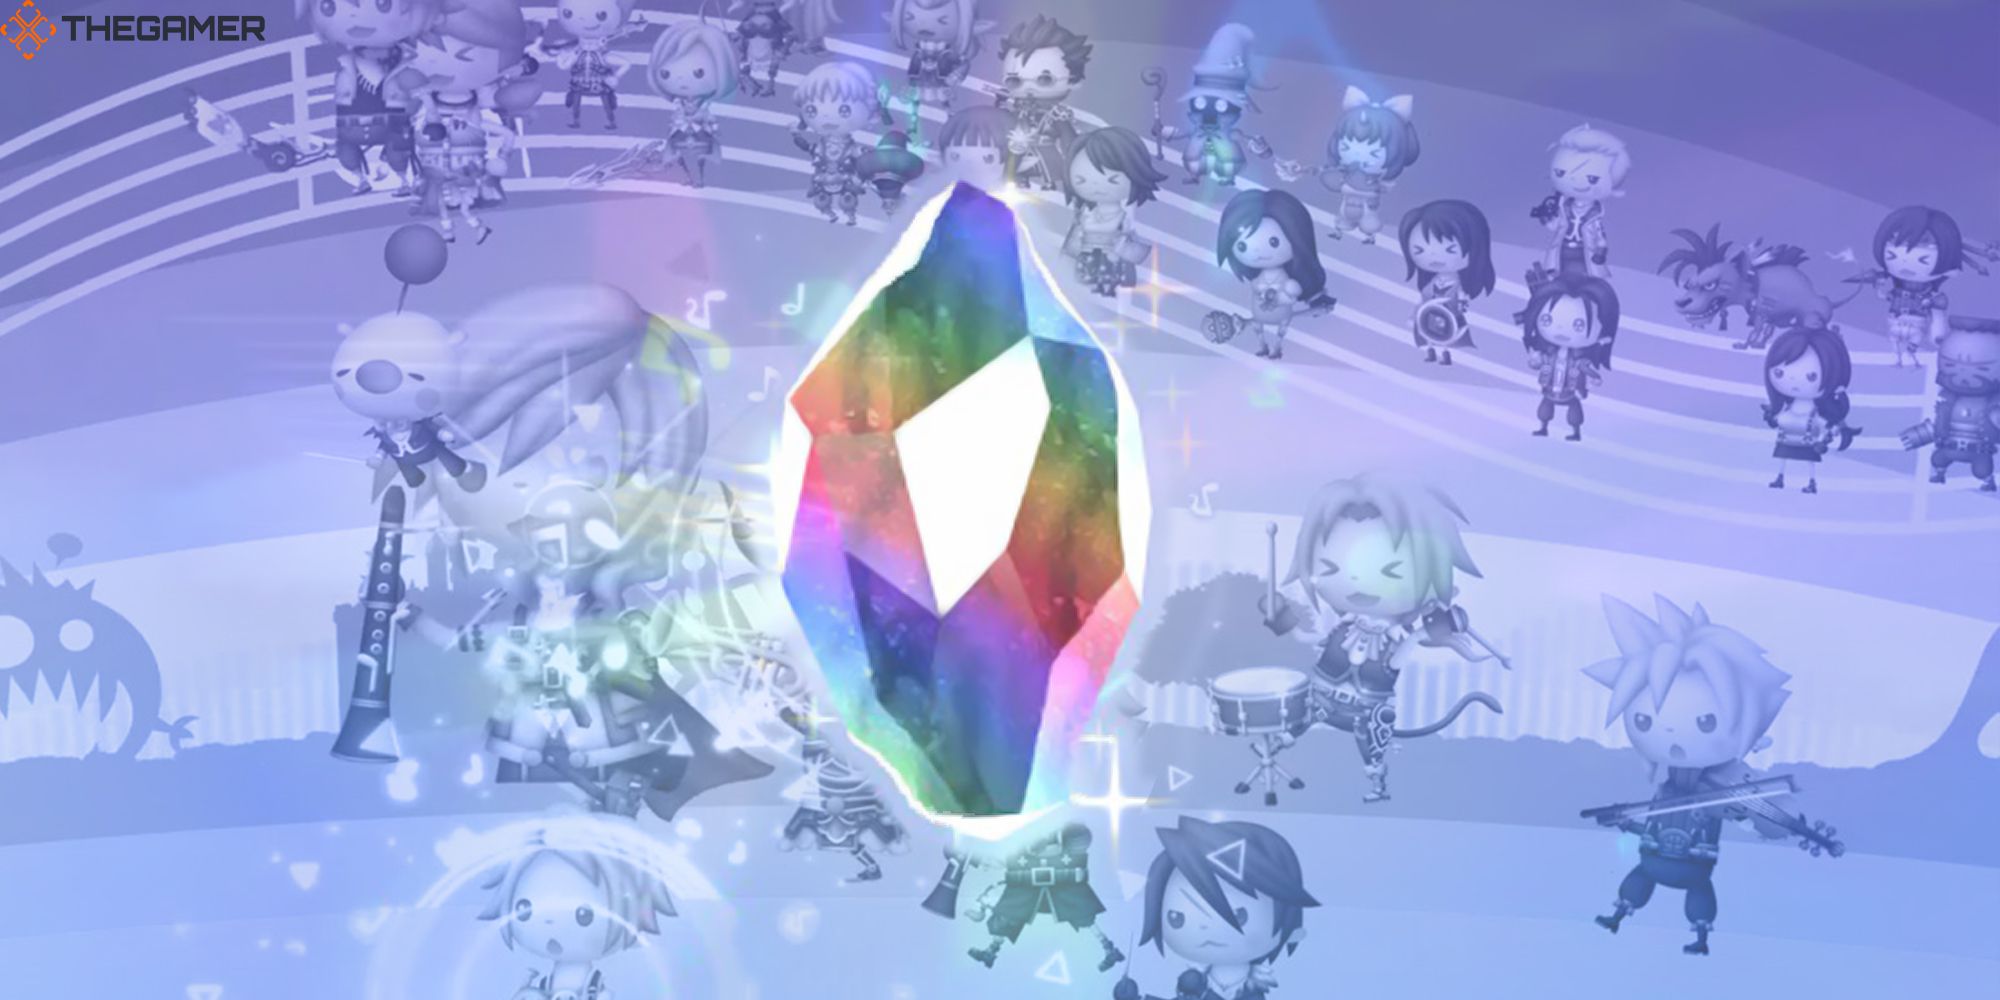 Final Fantasy heroes form a marching band behind a glowing Rhythmia crystal.